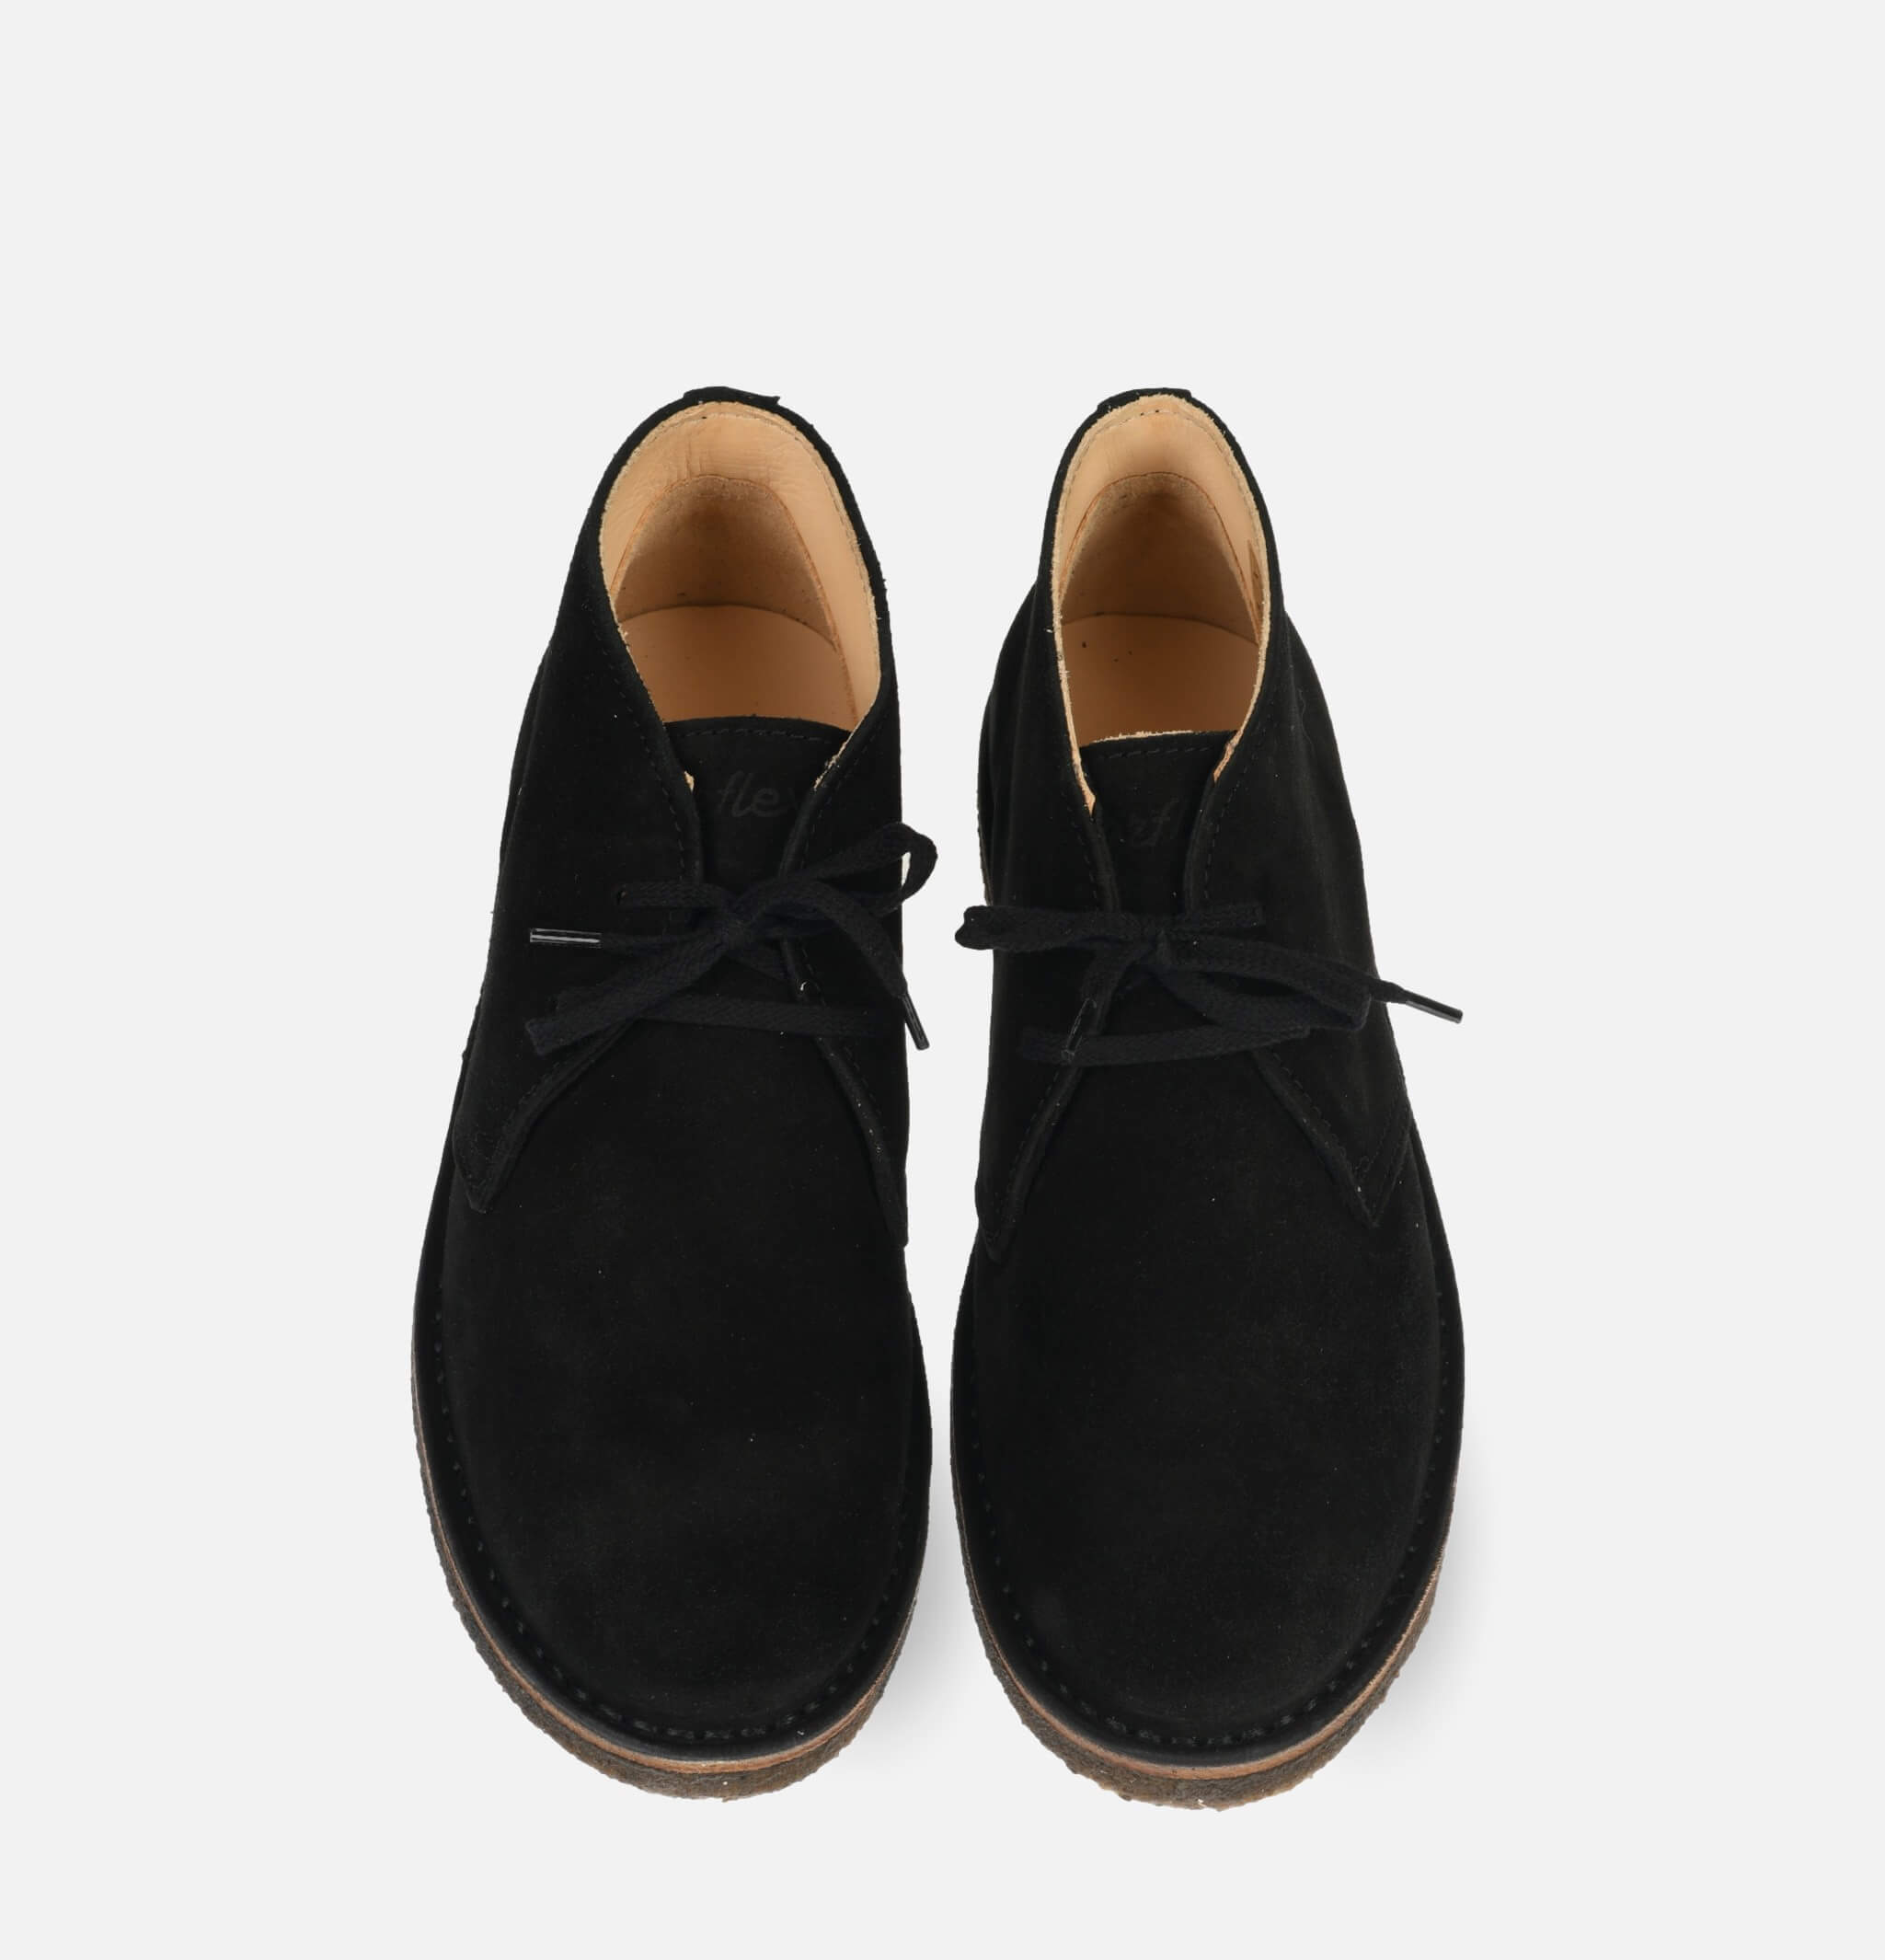 Greenflex Boots Black